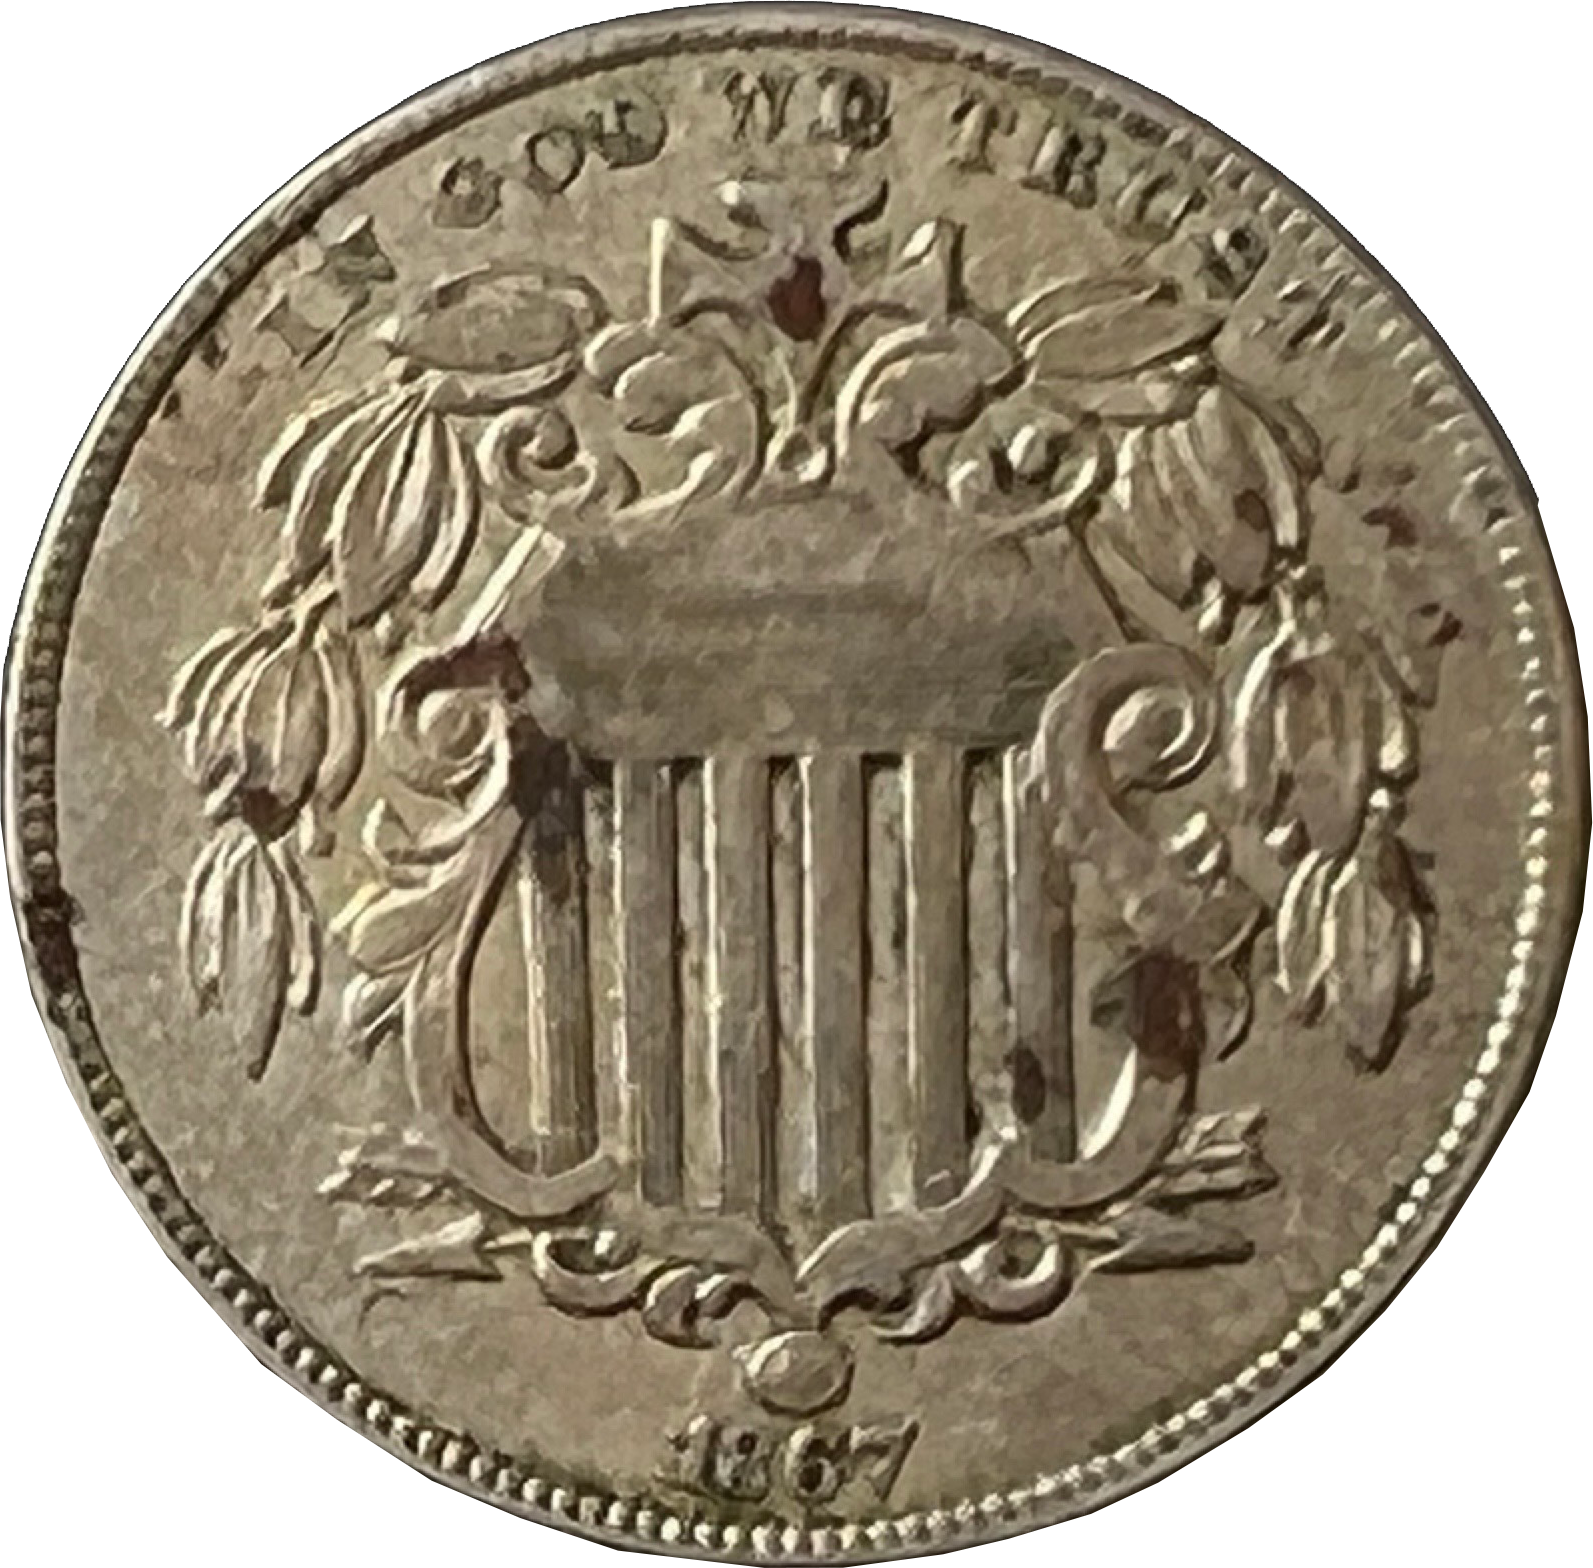  Shield Nickel (1866 - 1883) 